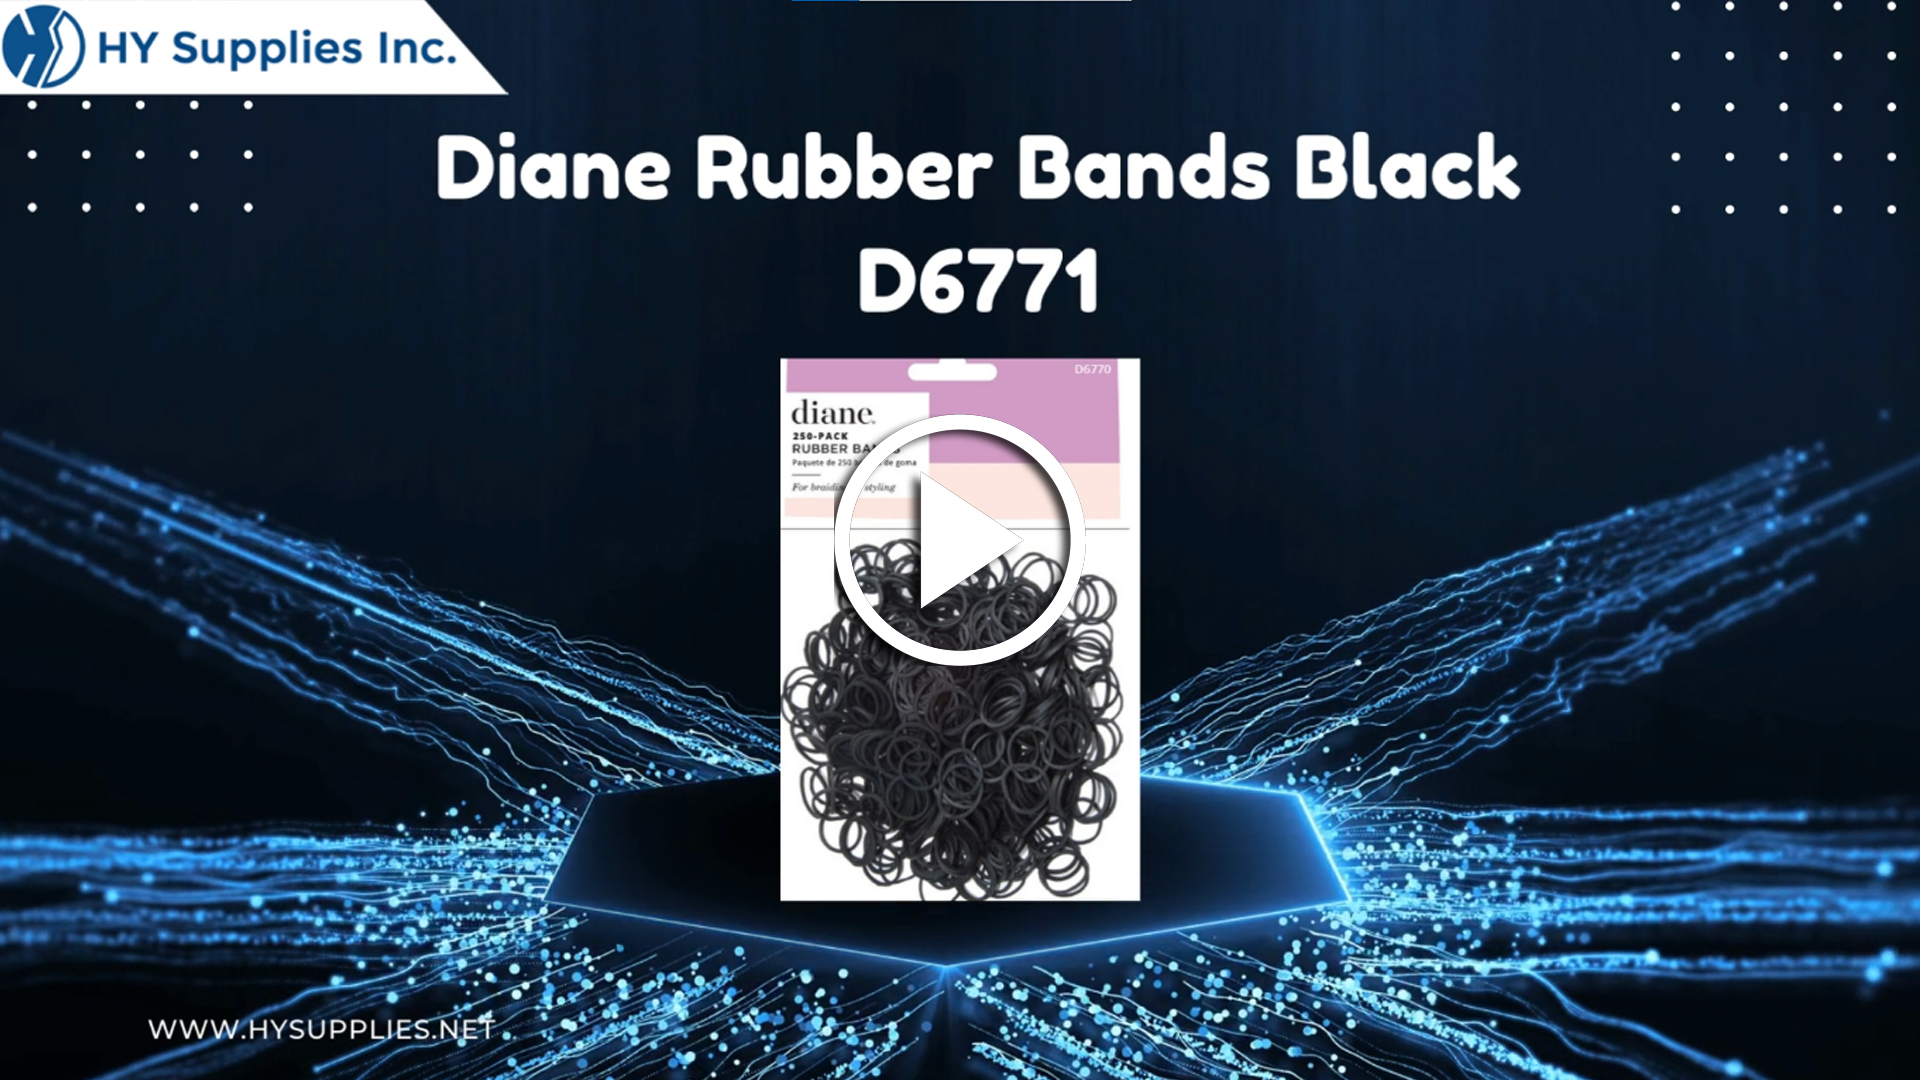 Diane Rubber Bands Black D6771